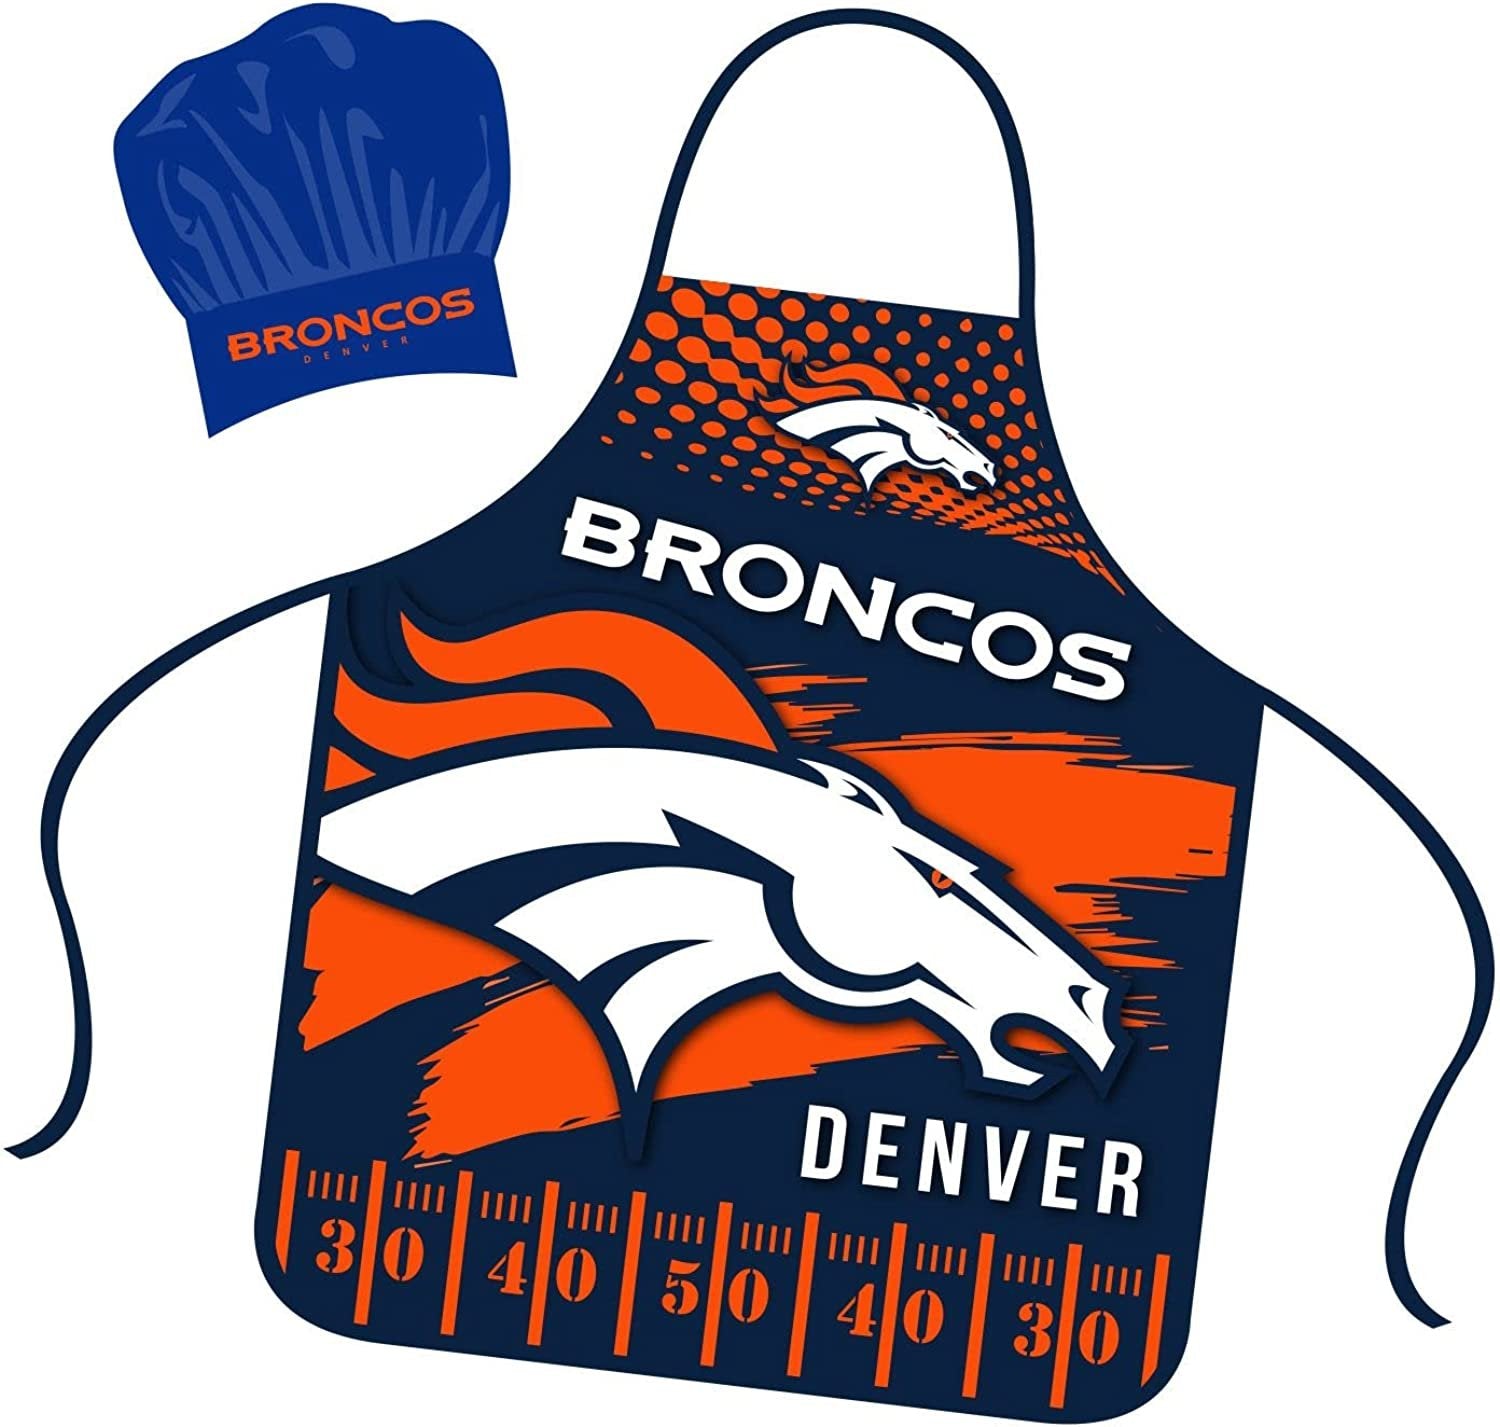 Denver Broncos Apron Chef Hat Set Full Color Universal Size Tie Back Grilling Tailgate BBQ Cooking Host